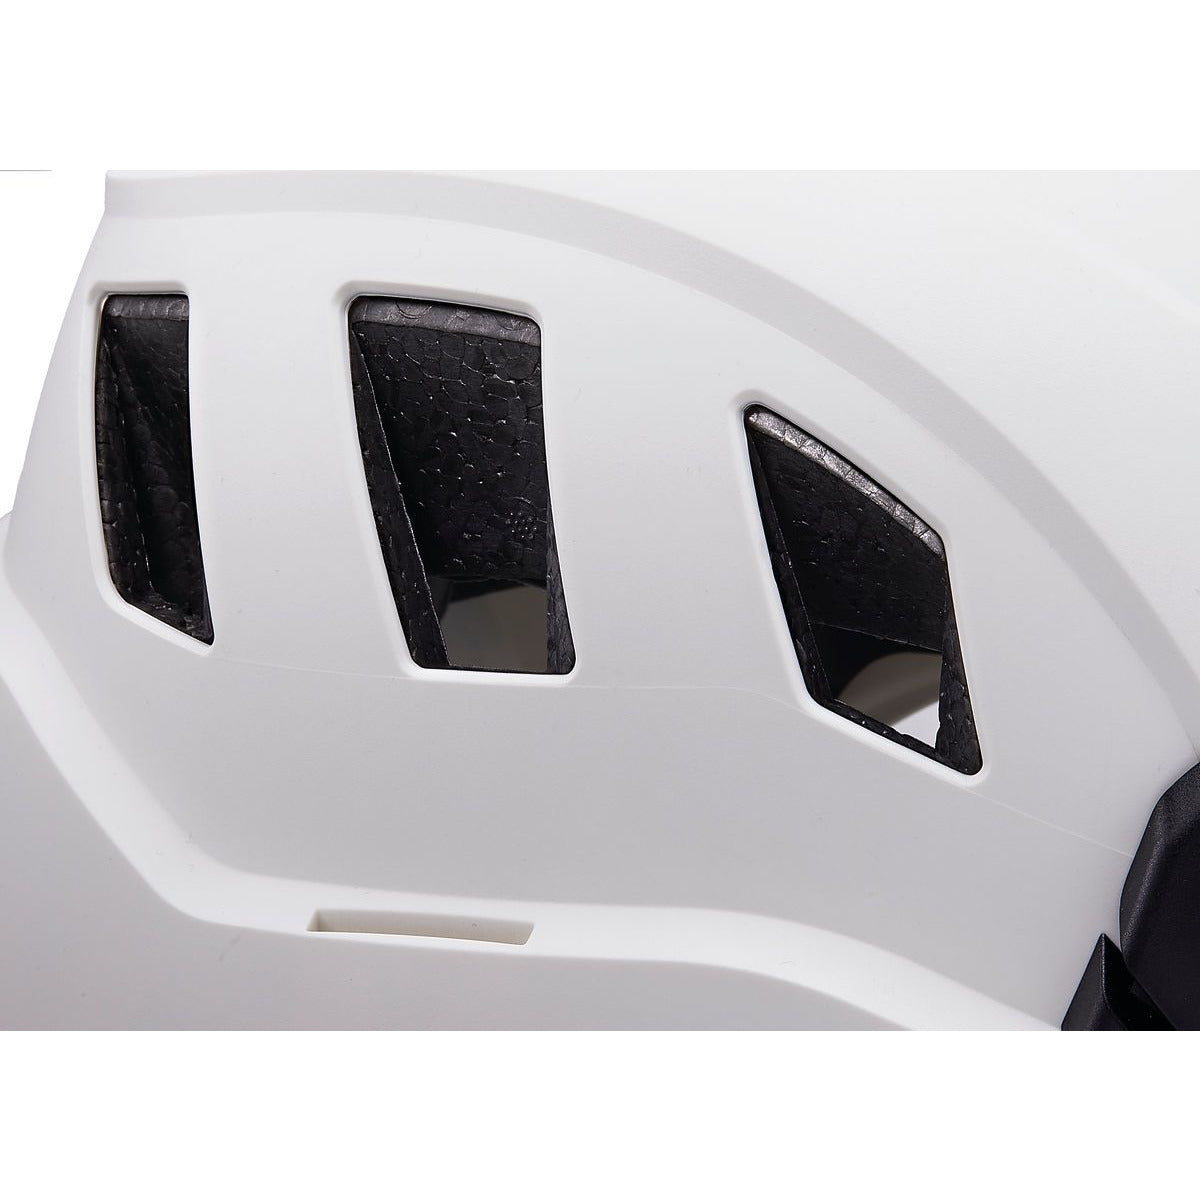 Petzl Strato Vent Helmet - Aerial Adventure Tech